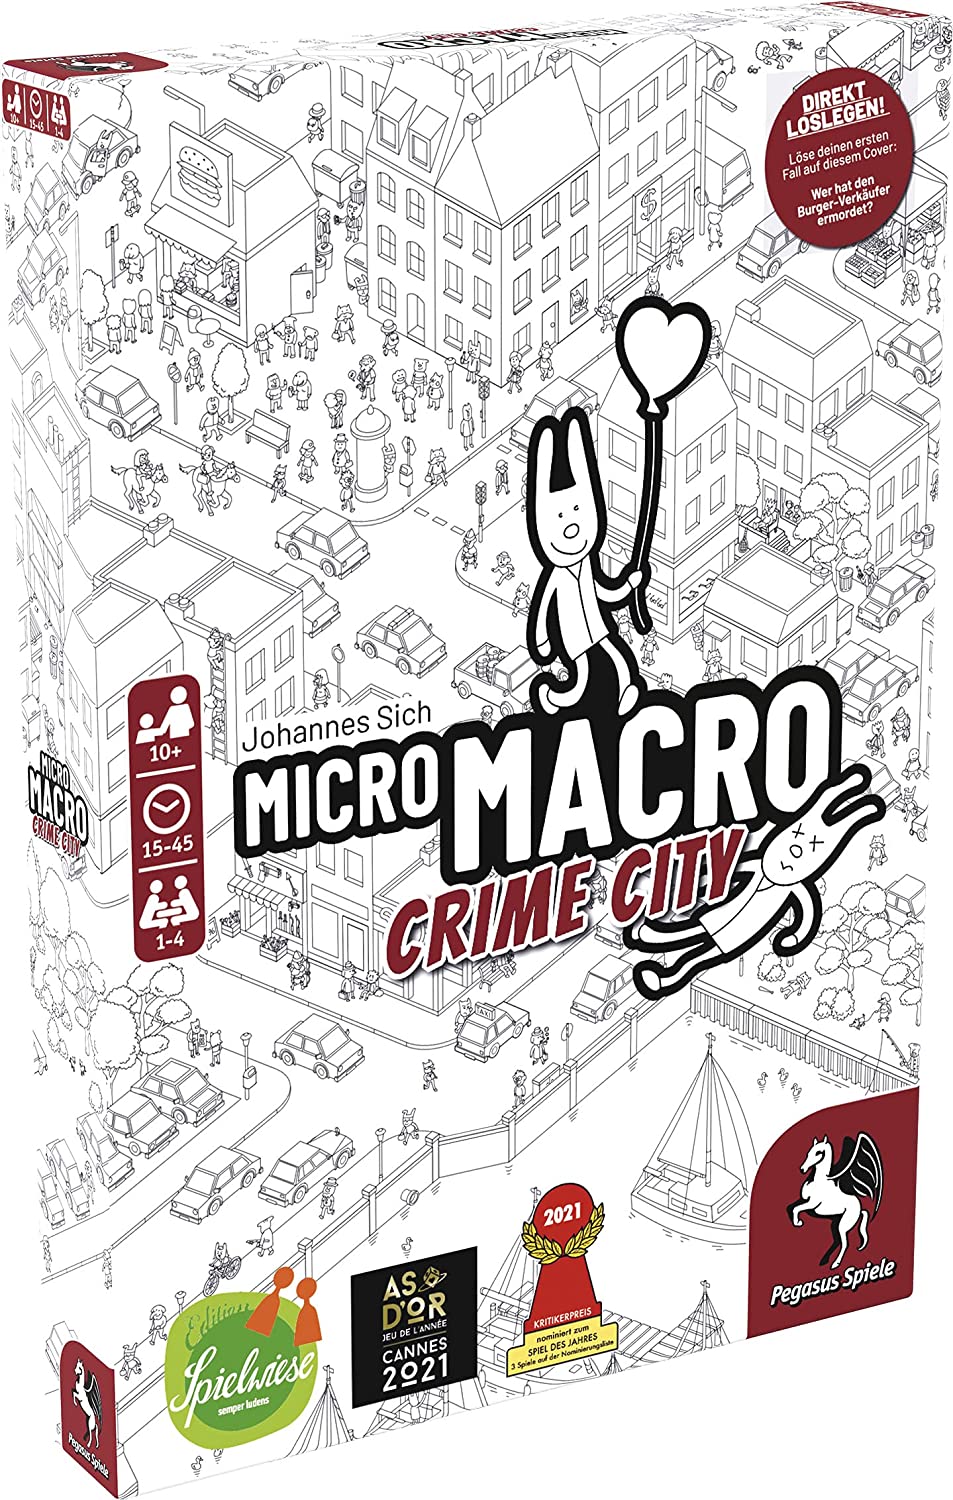 MicroMacro: Crime City nom. zum Spiel des Jahres 2021